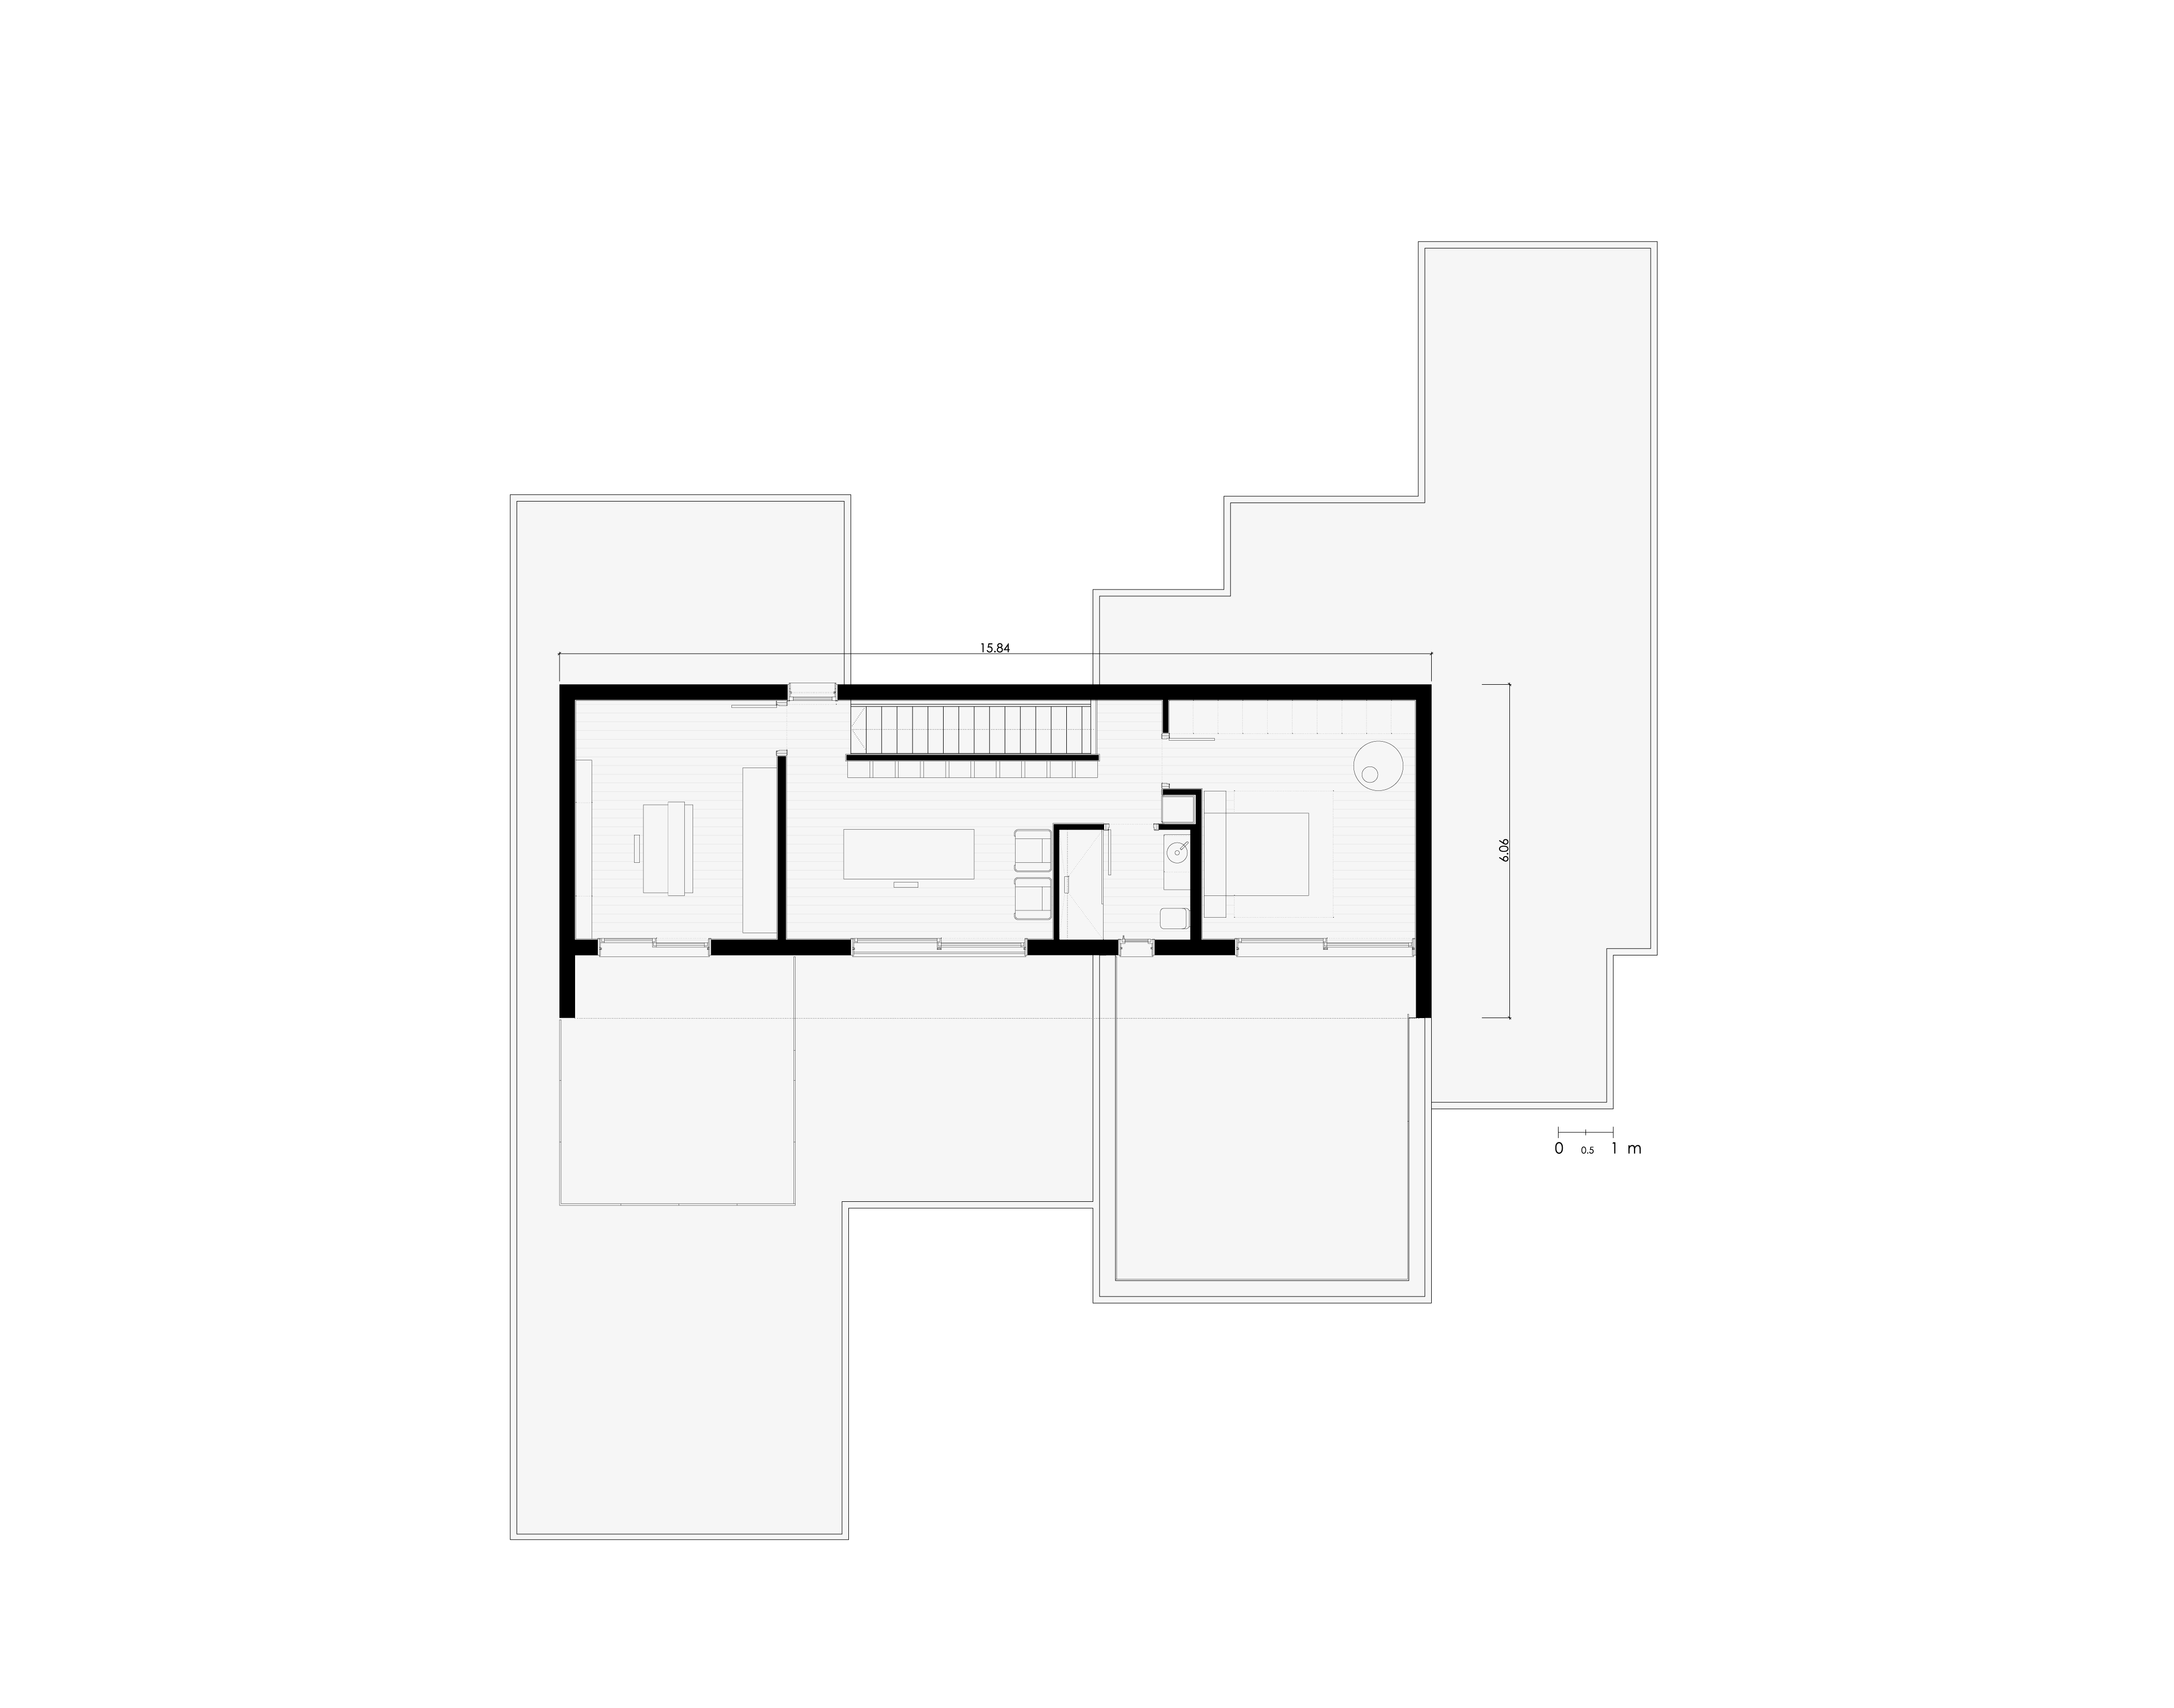 Casa modular de estilo arquitectónico moderno - Plano primera planta